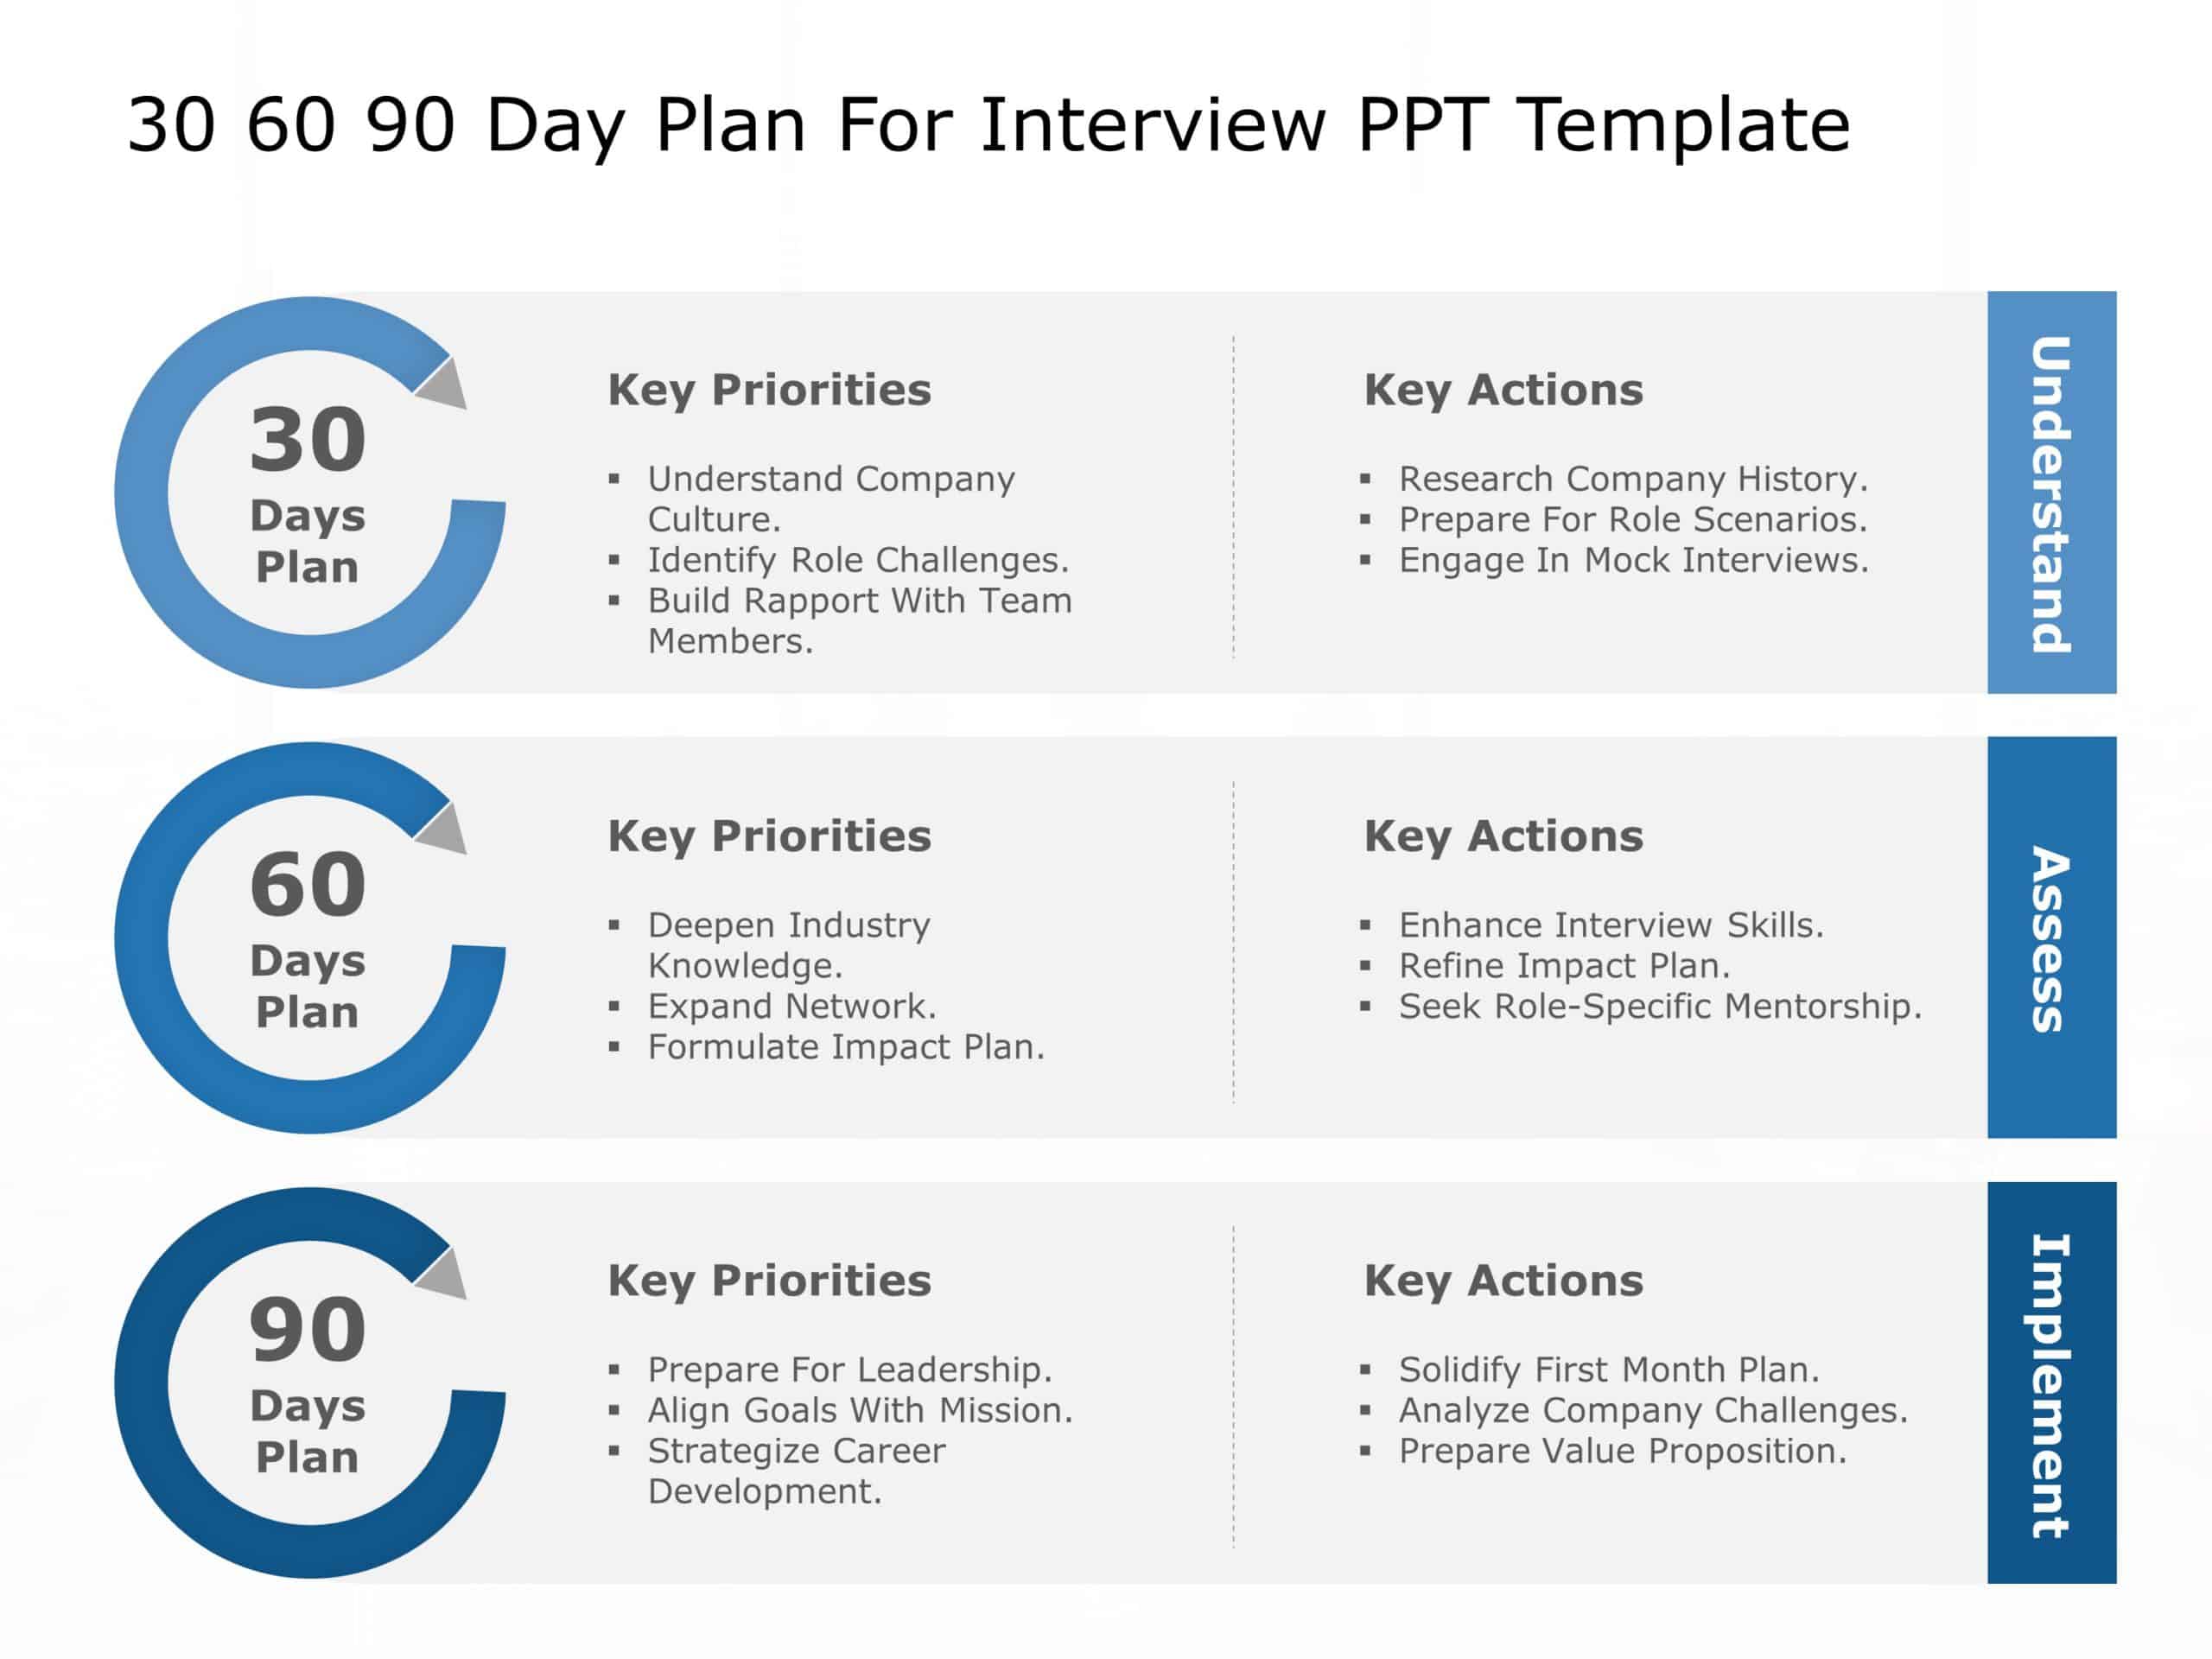 30 60 90 Day Plan For Interview & Google Slides Theme